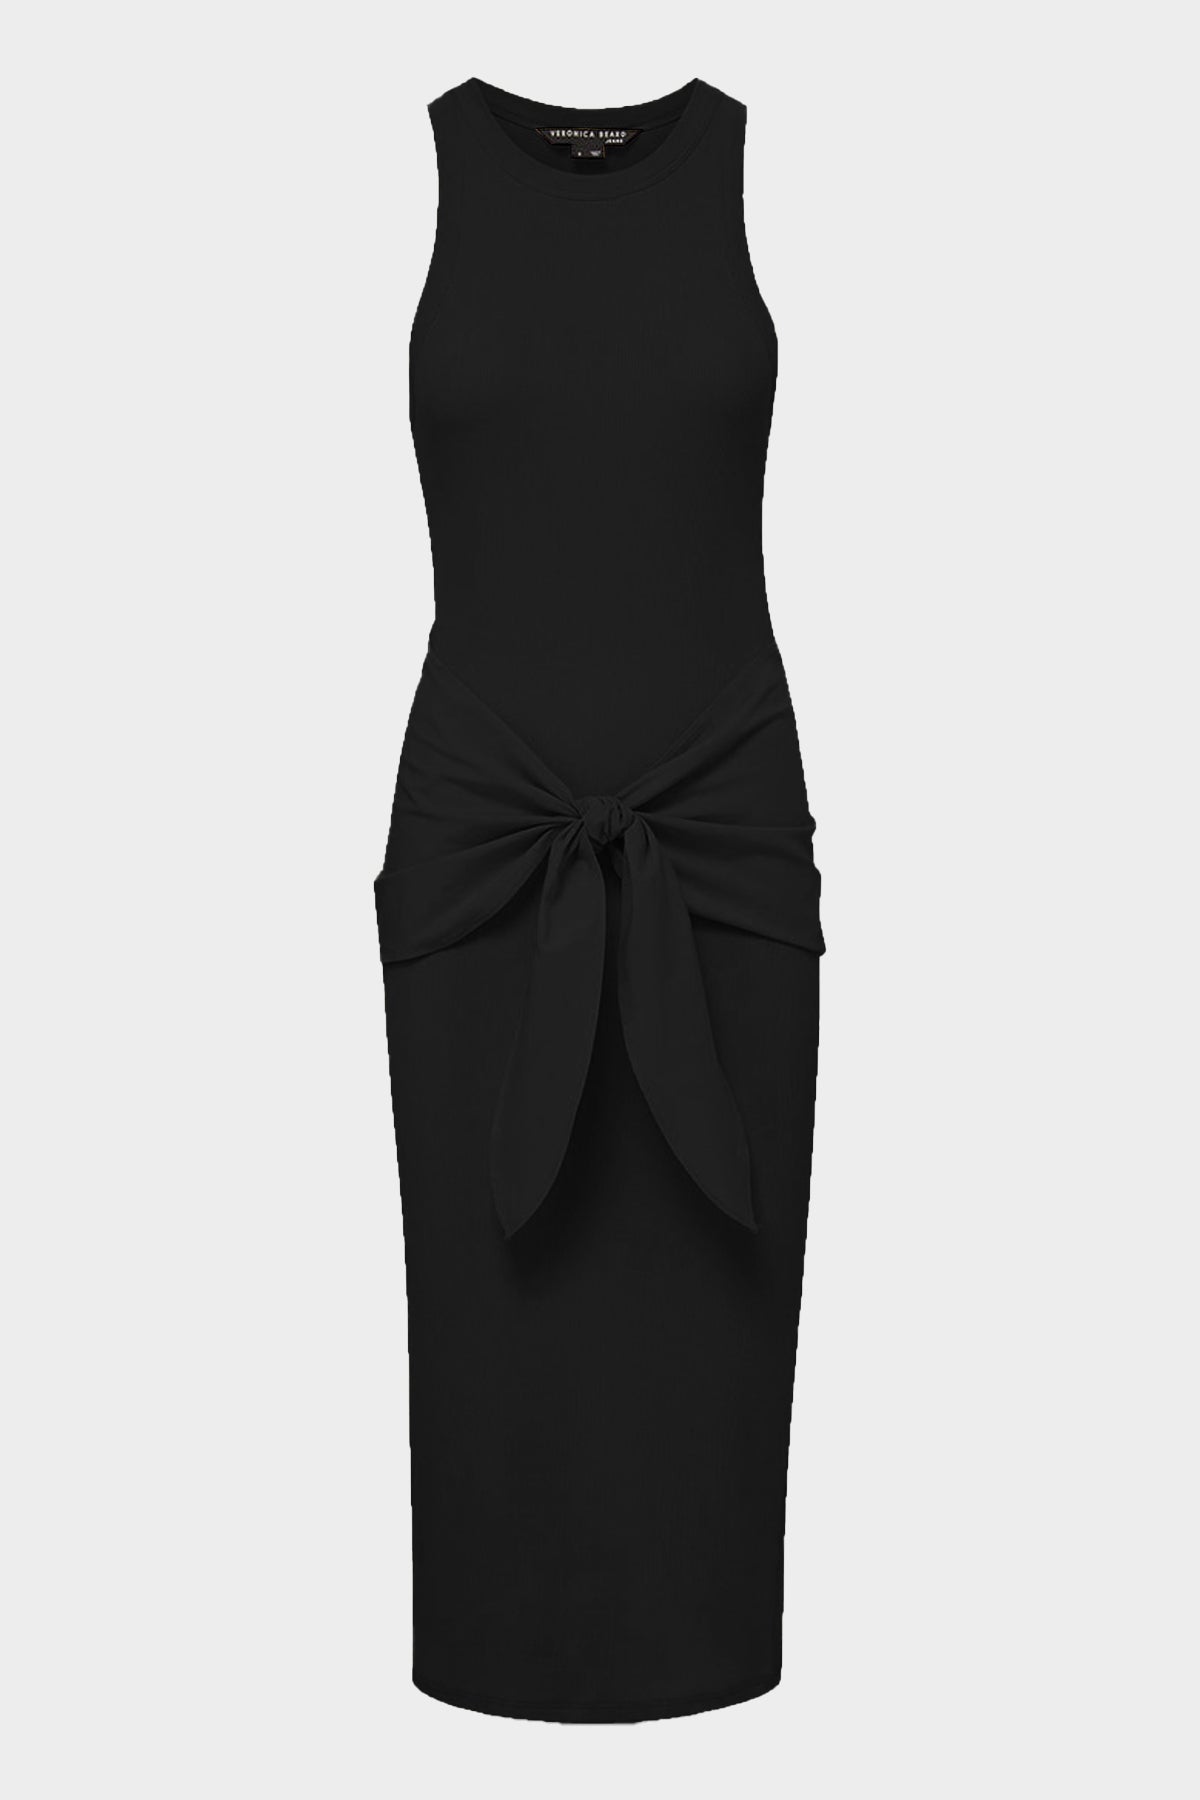 Odeon Ribbed Dress in Black - shop-olivia.com